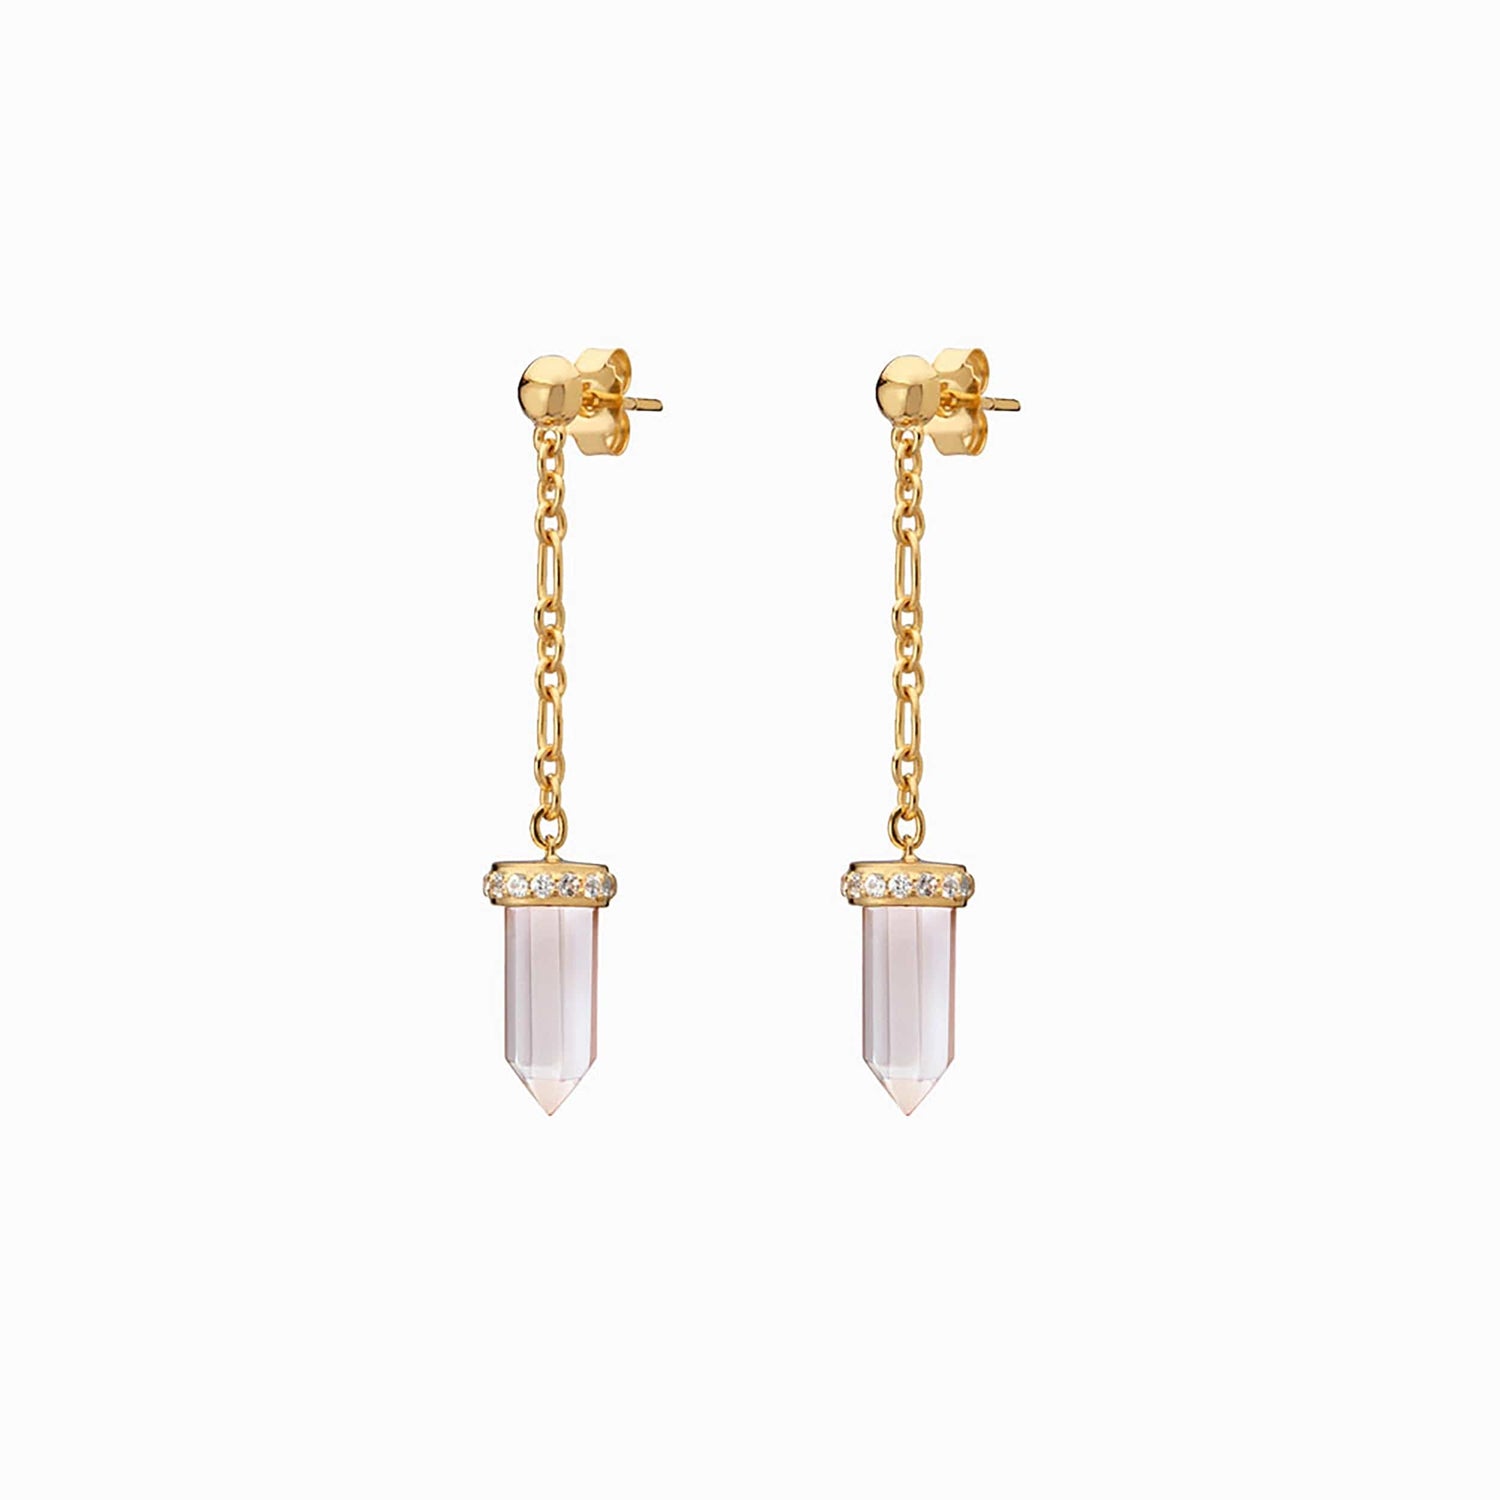 Product image of Awe Inspired Earrings 14K Yellow Gold Vermeil / Pair Crystal Quartz Drop Earrings